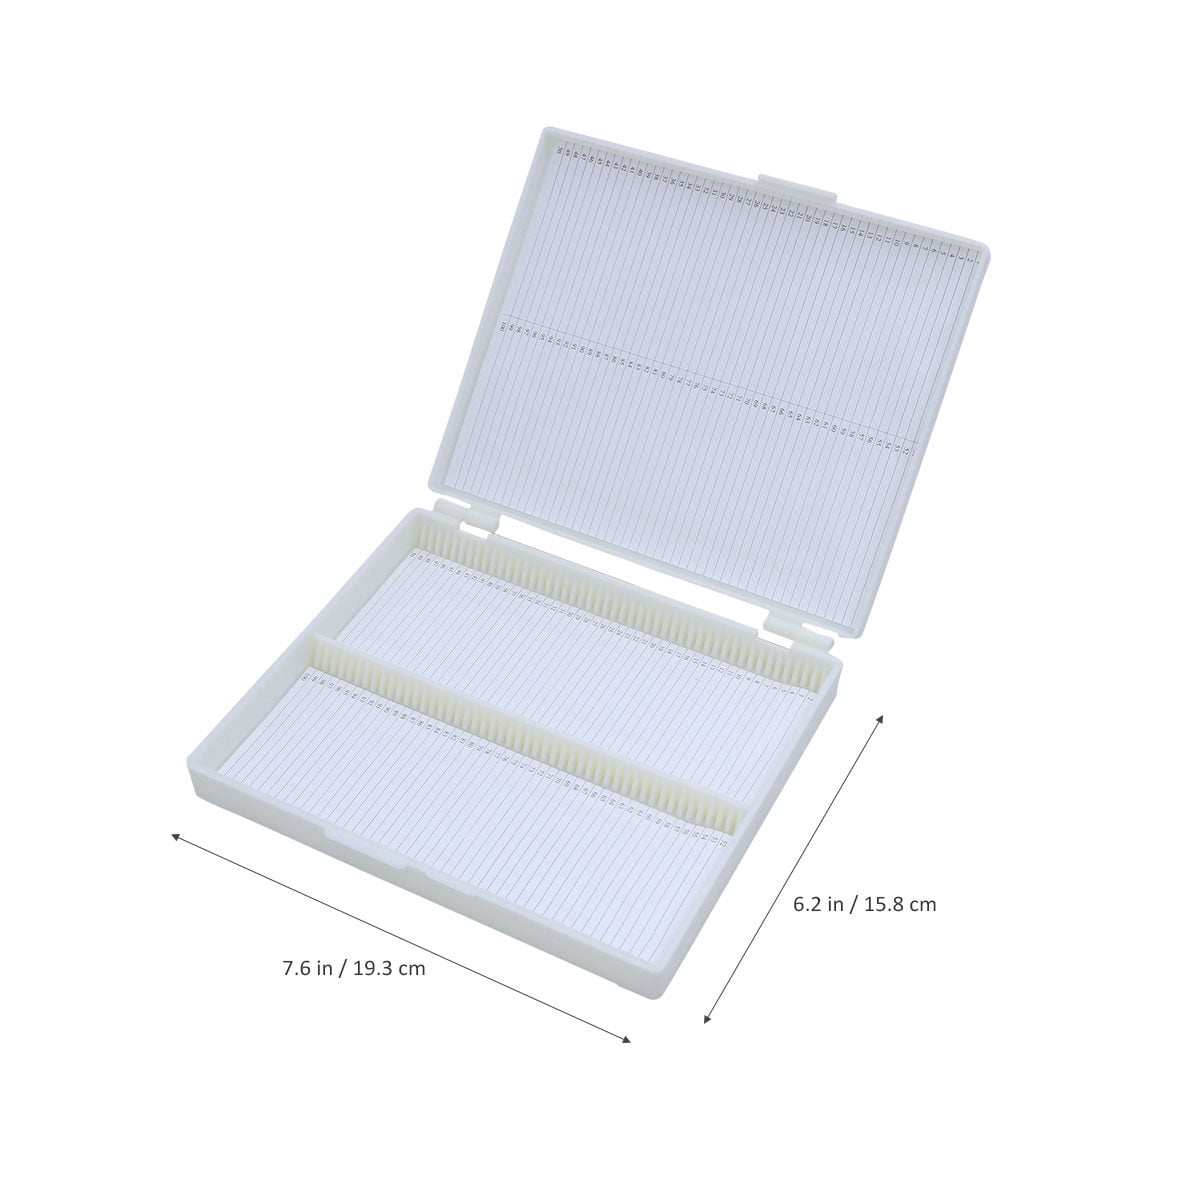 100 Slide Box Storage/Holder - Microscope Slide Stand for Histology